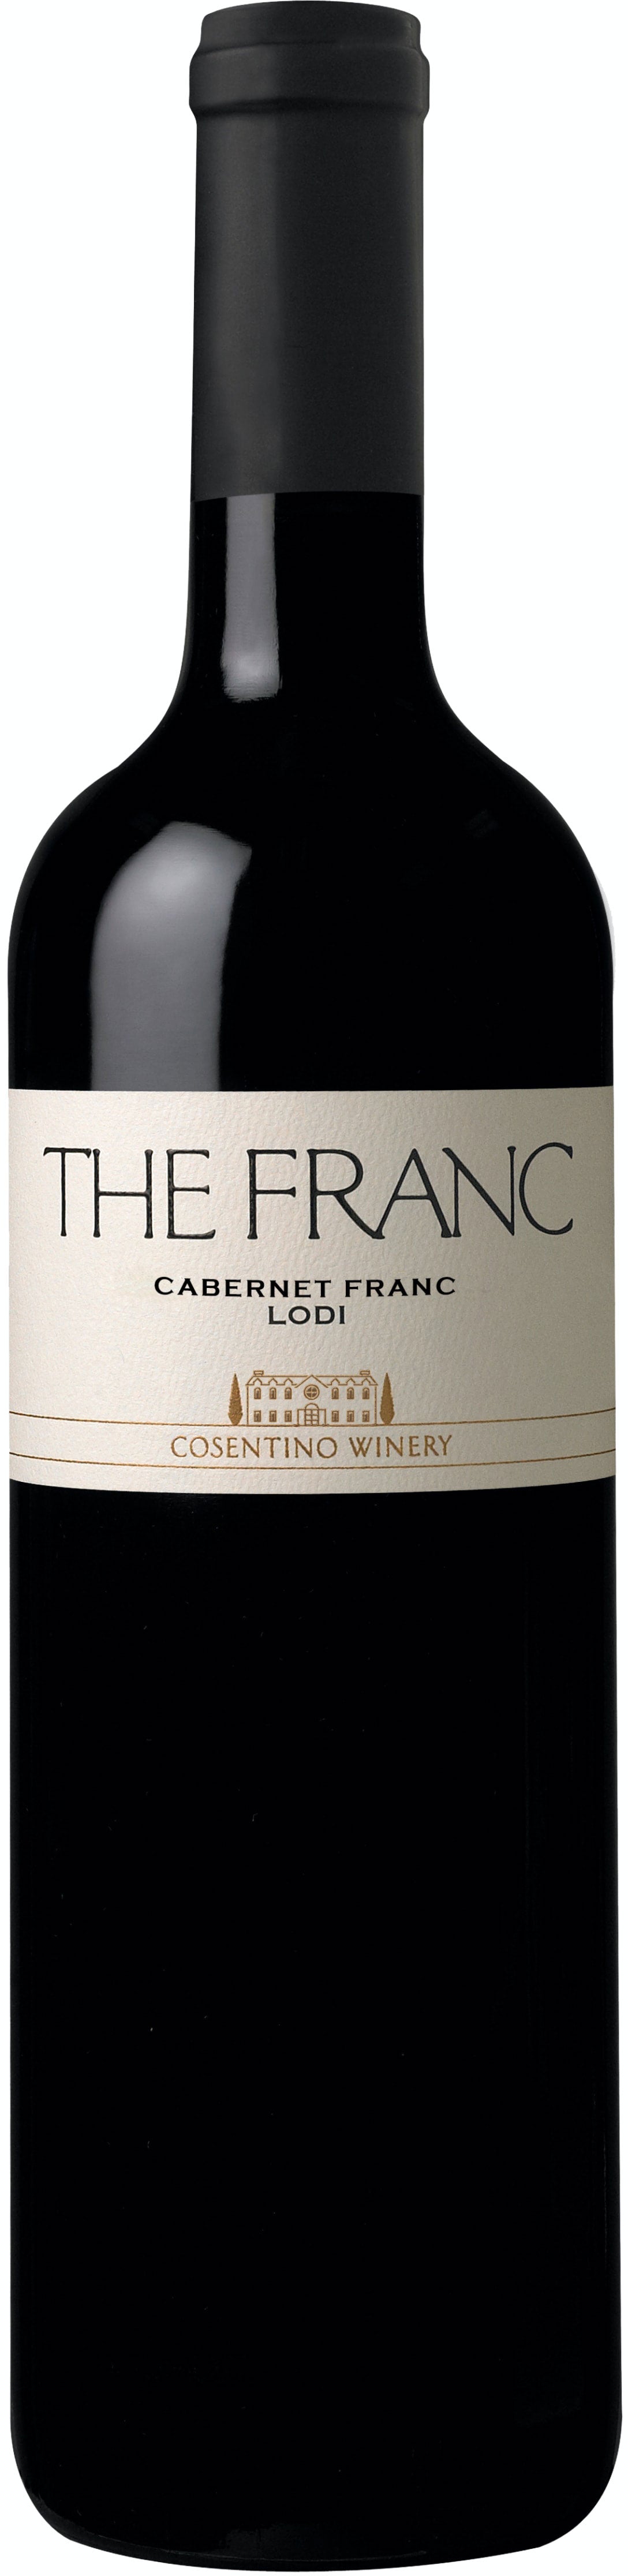 Cosentino Winery Cabernet Franc The Franc 2018